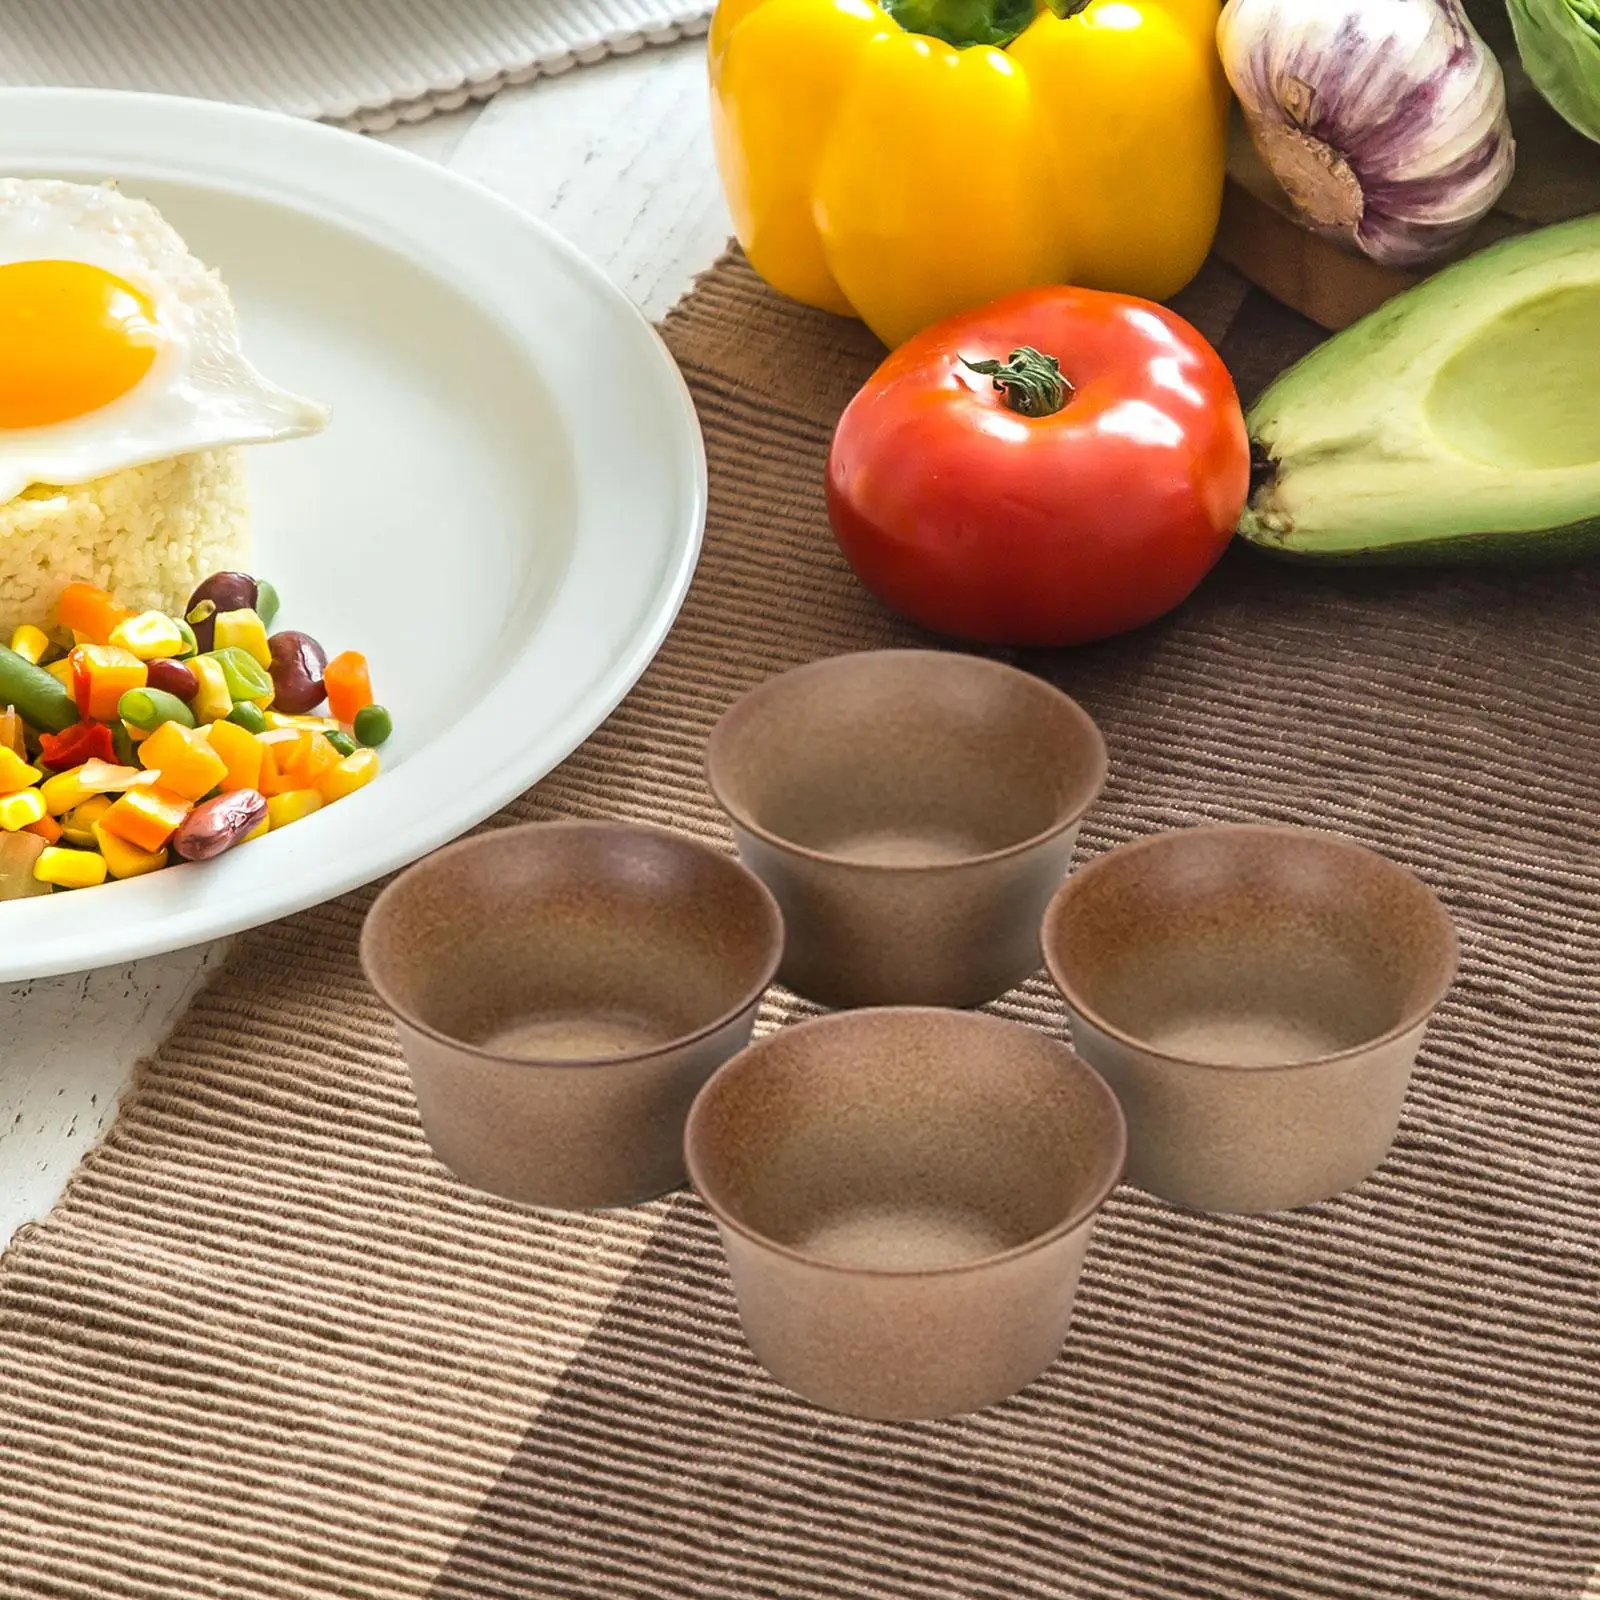 4x Japanese Tea Cups Set Traditional Coffee Mug Drinkware without Handles for Green Tea Restaurant Matcha Tea Home Cappuccino